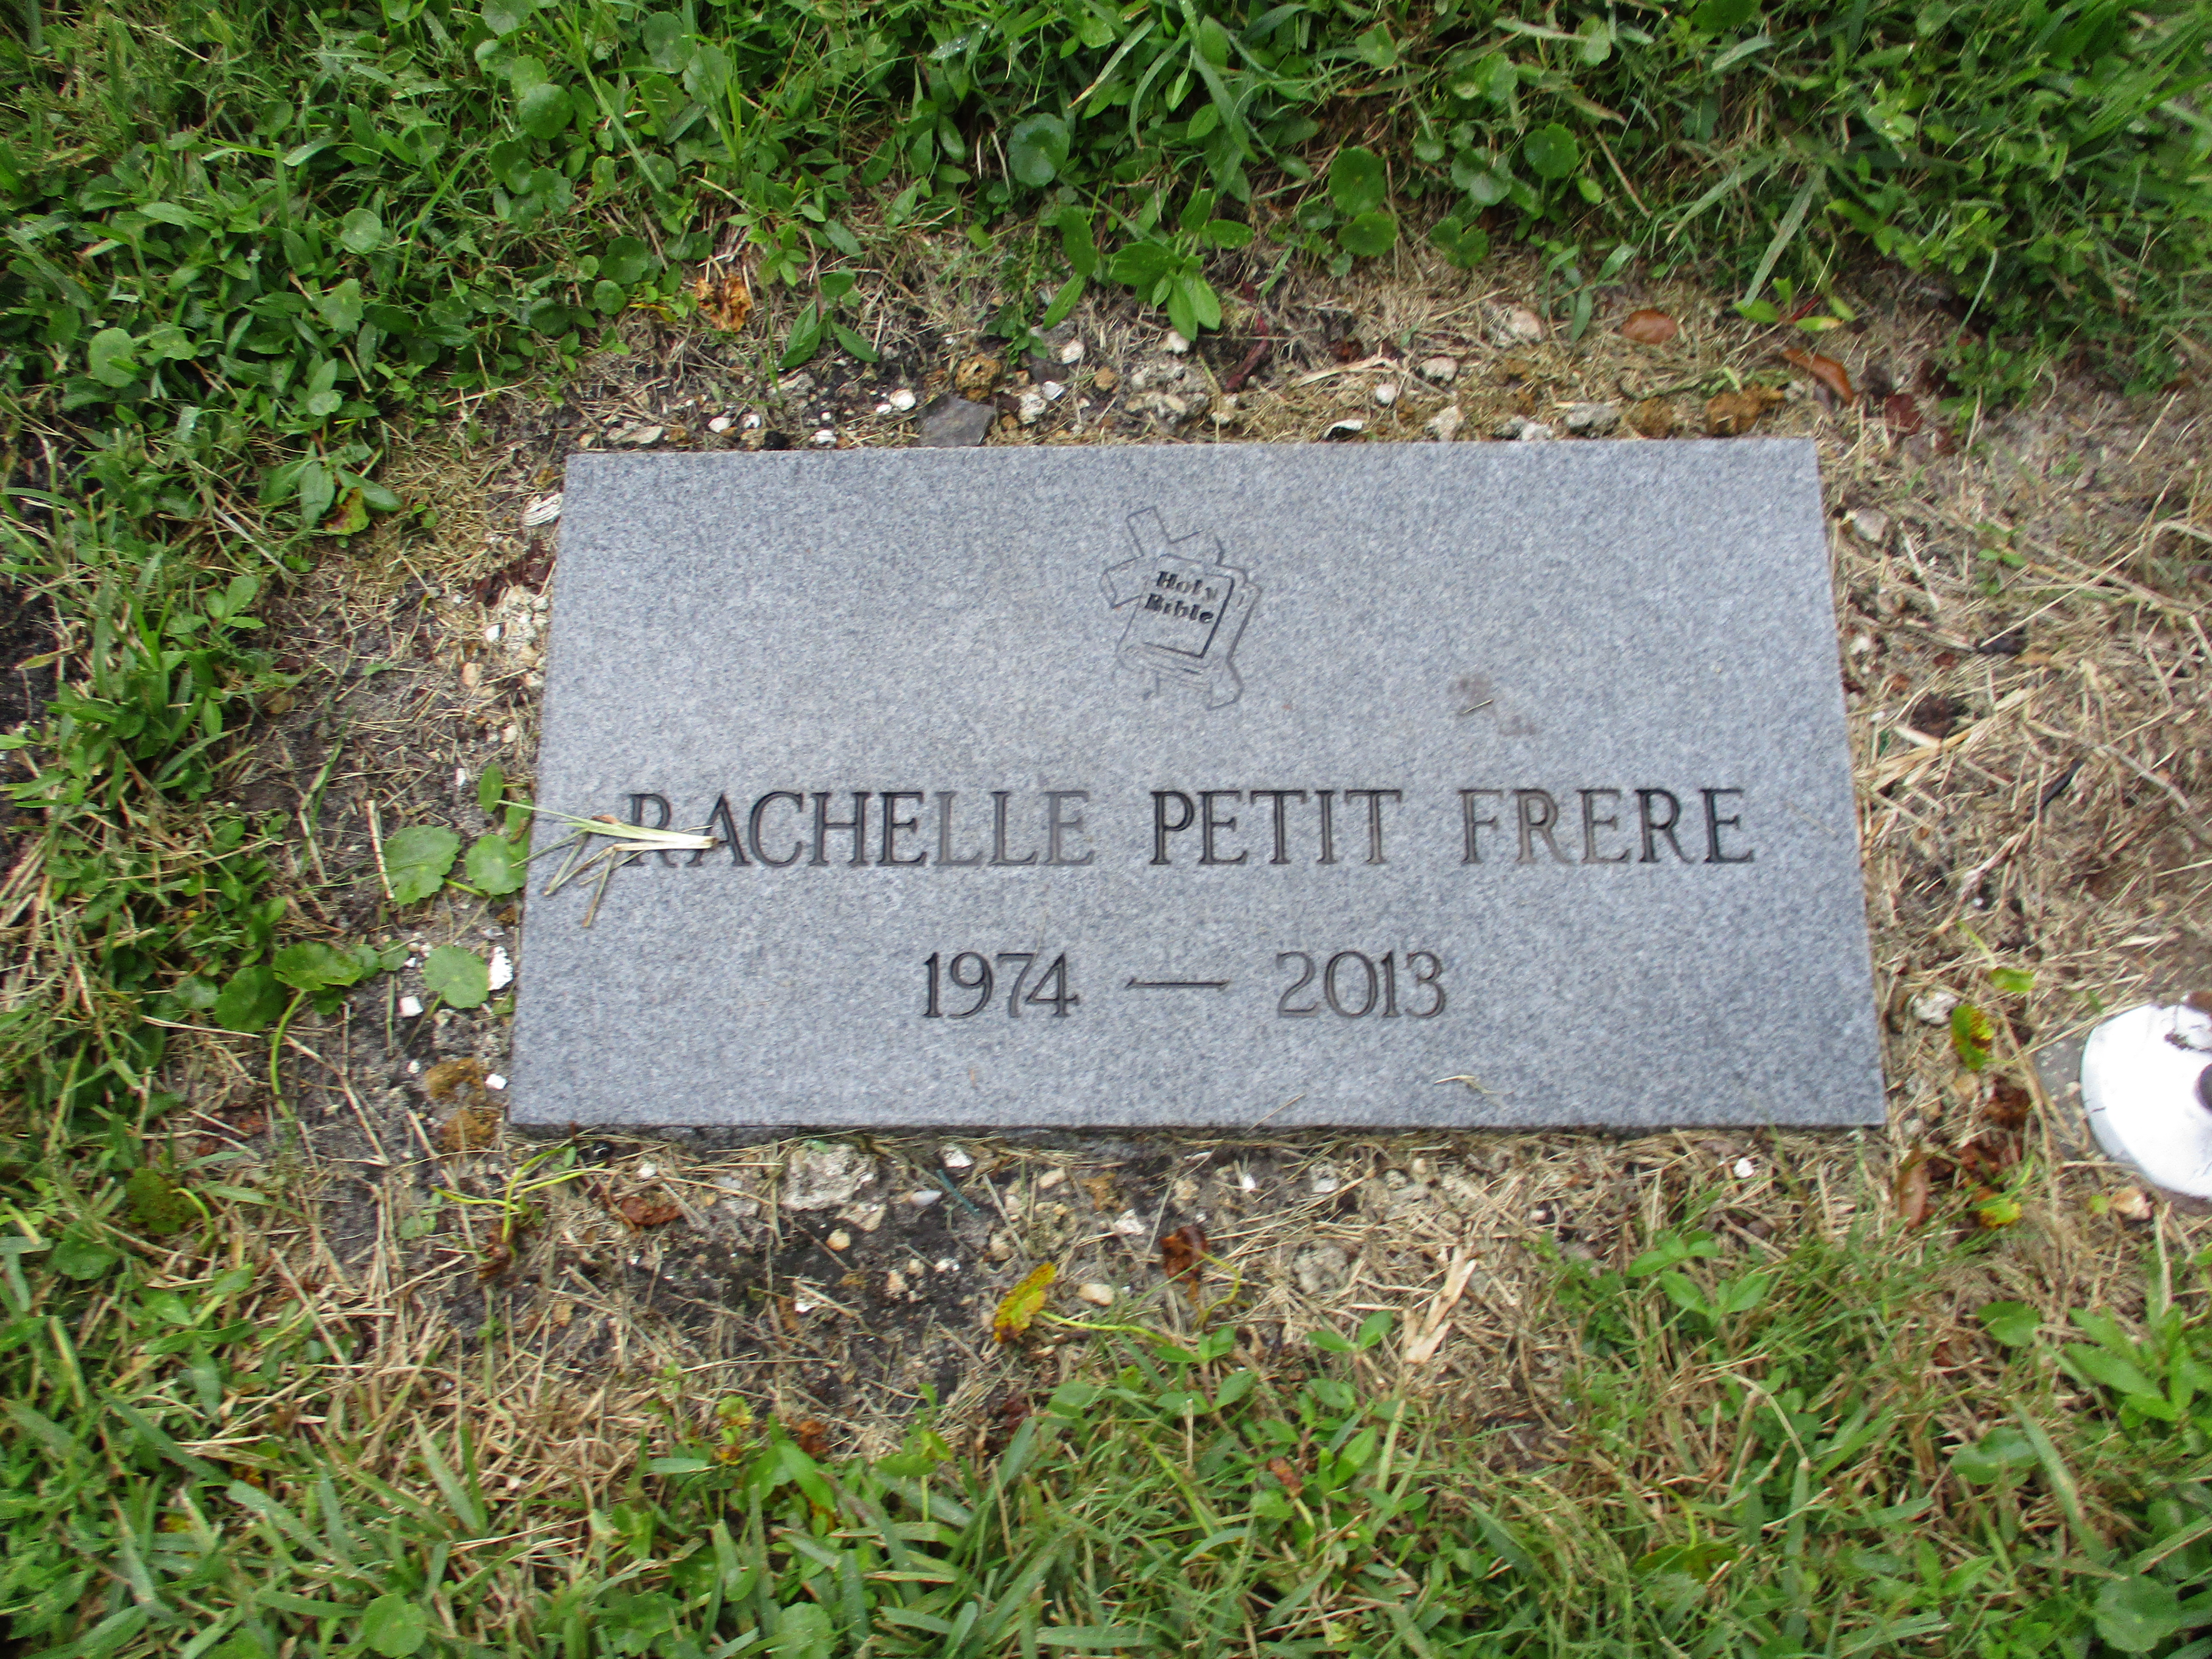 Rachelle Petit Frere